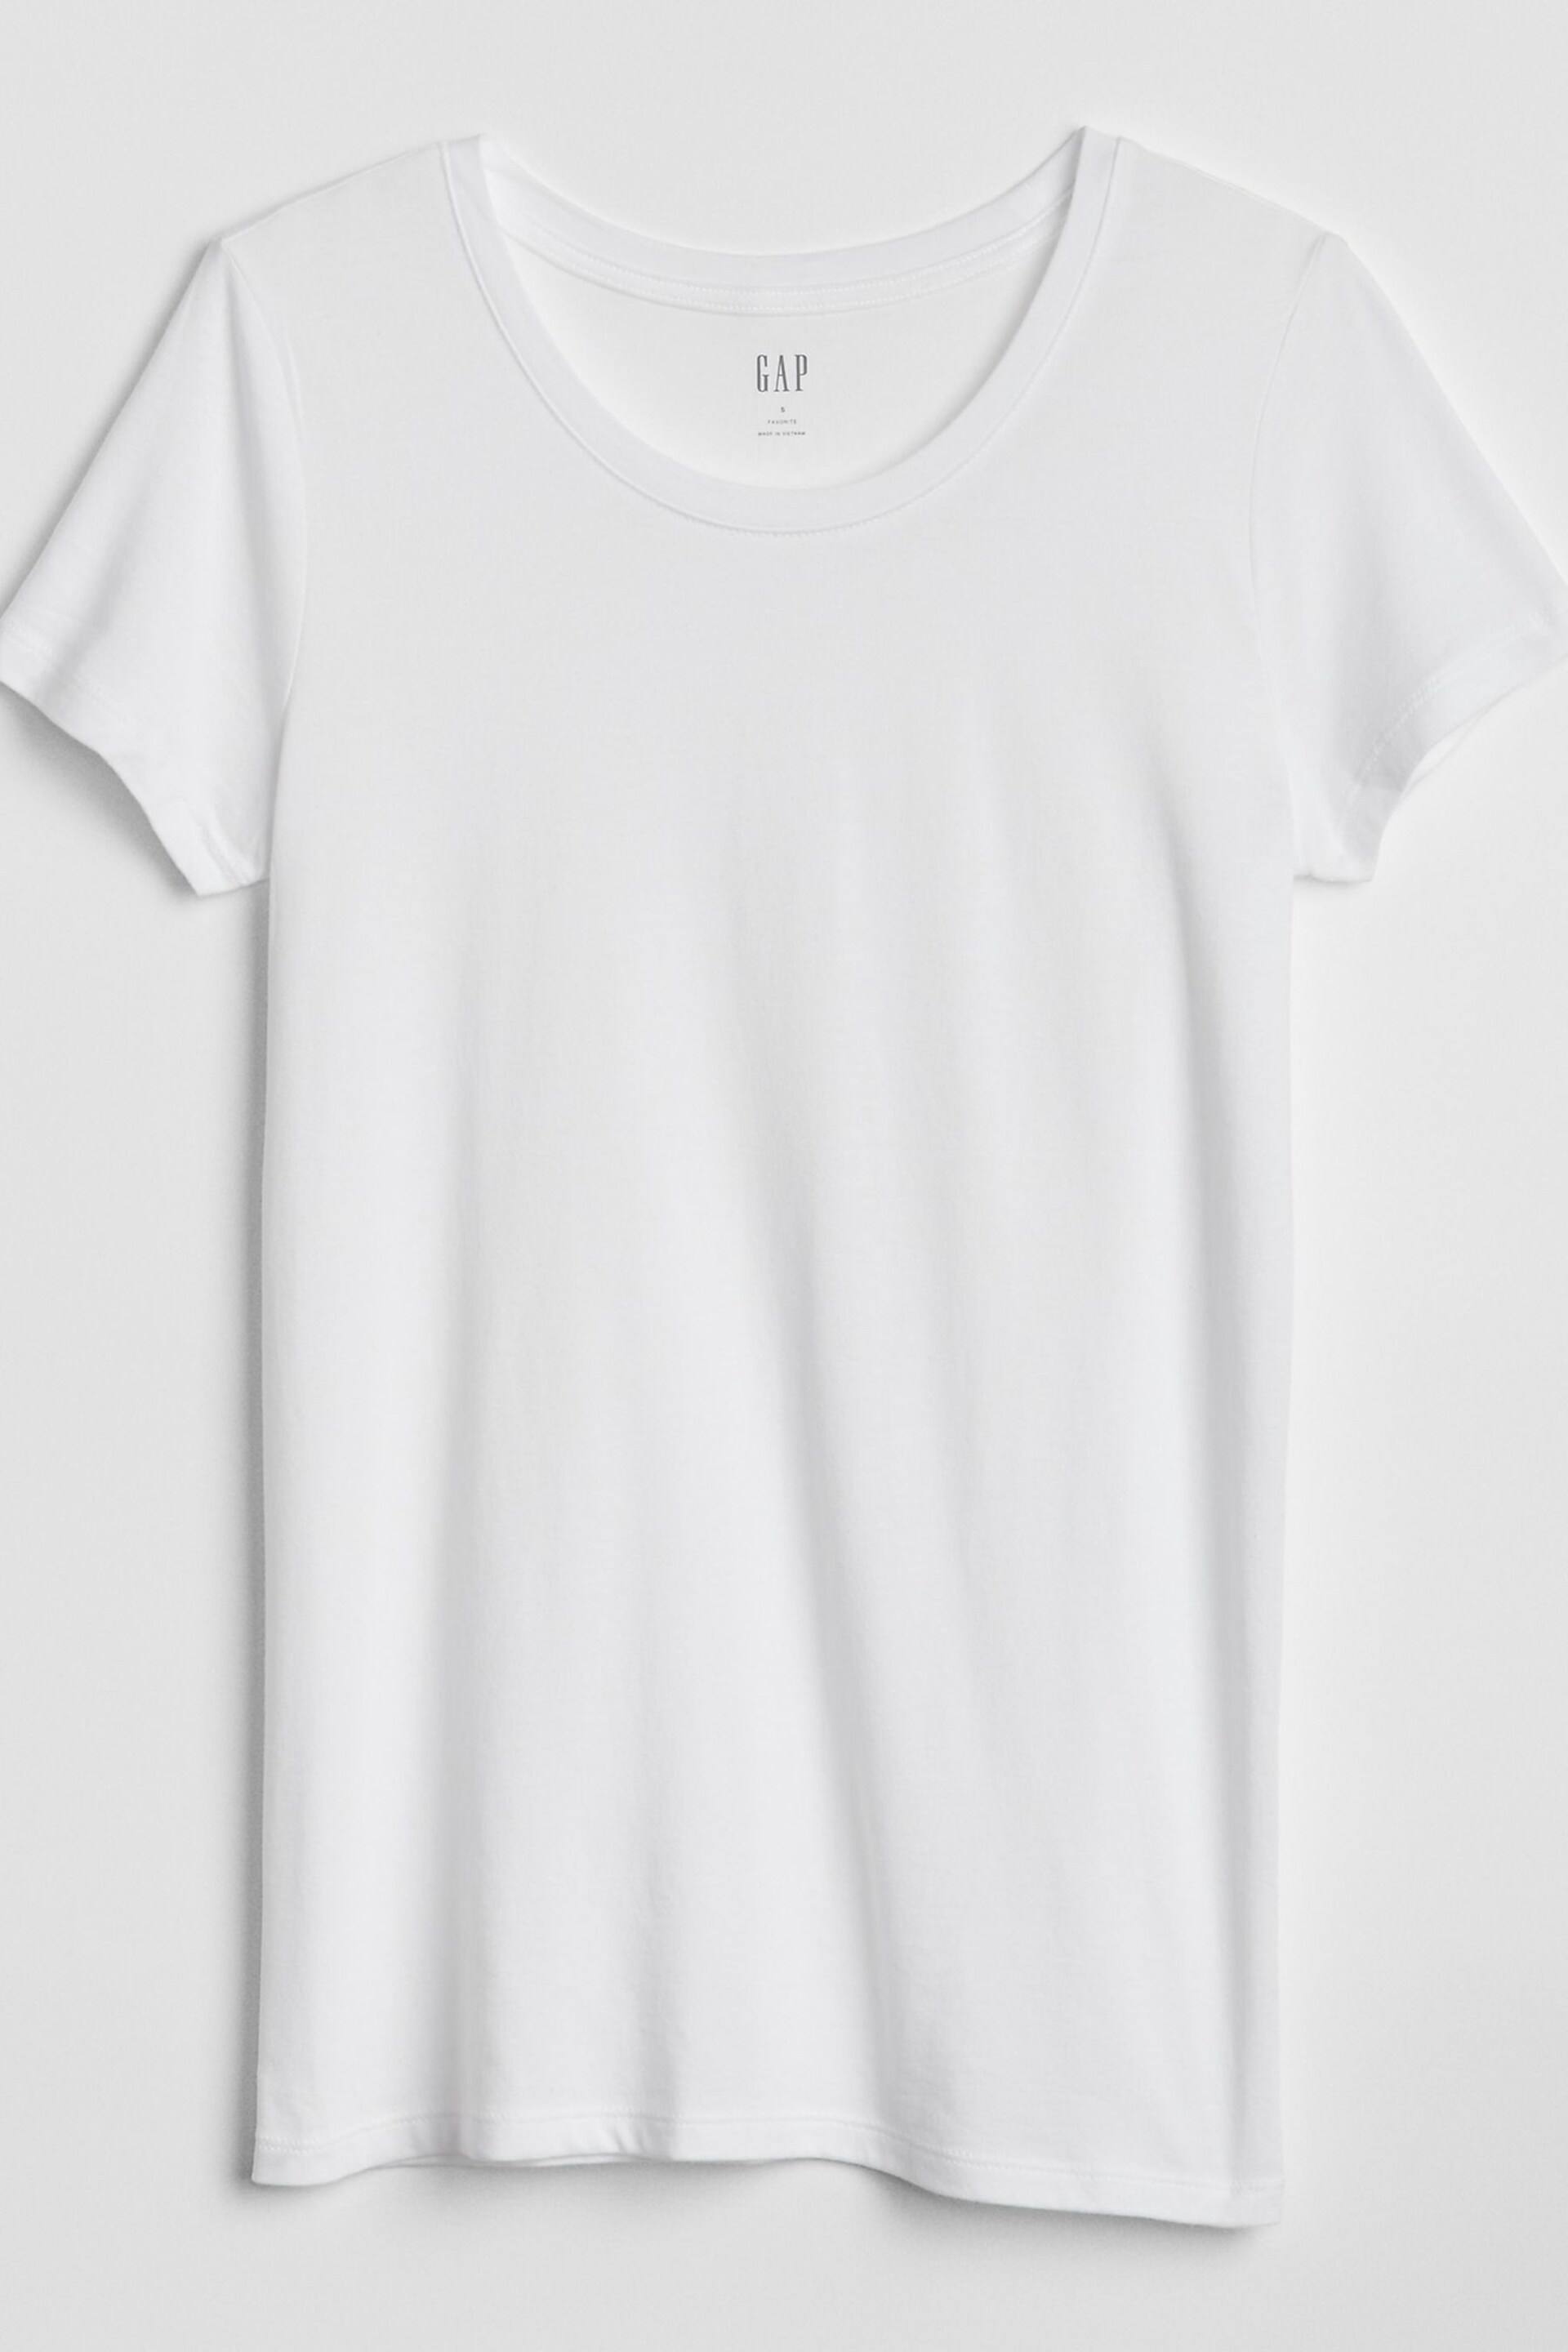 Gap White Favourite Short Sleeve Crew Neck T-Shirt - Image 3 of 3